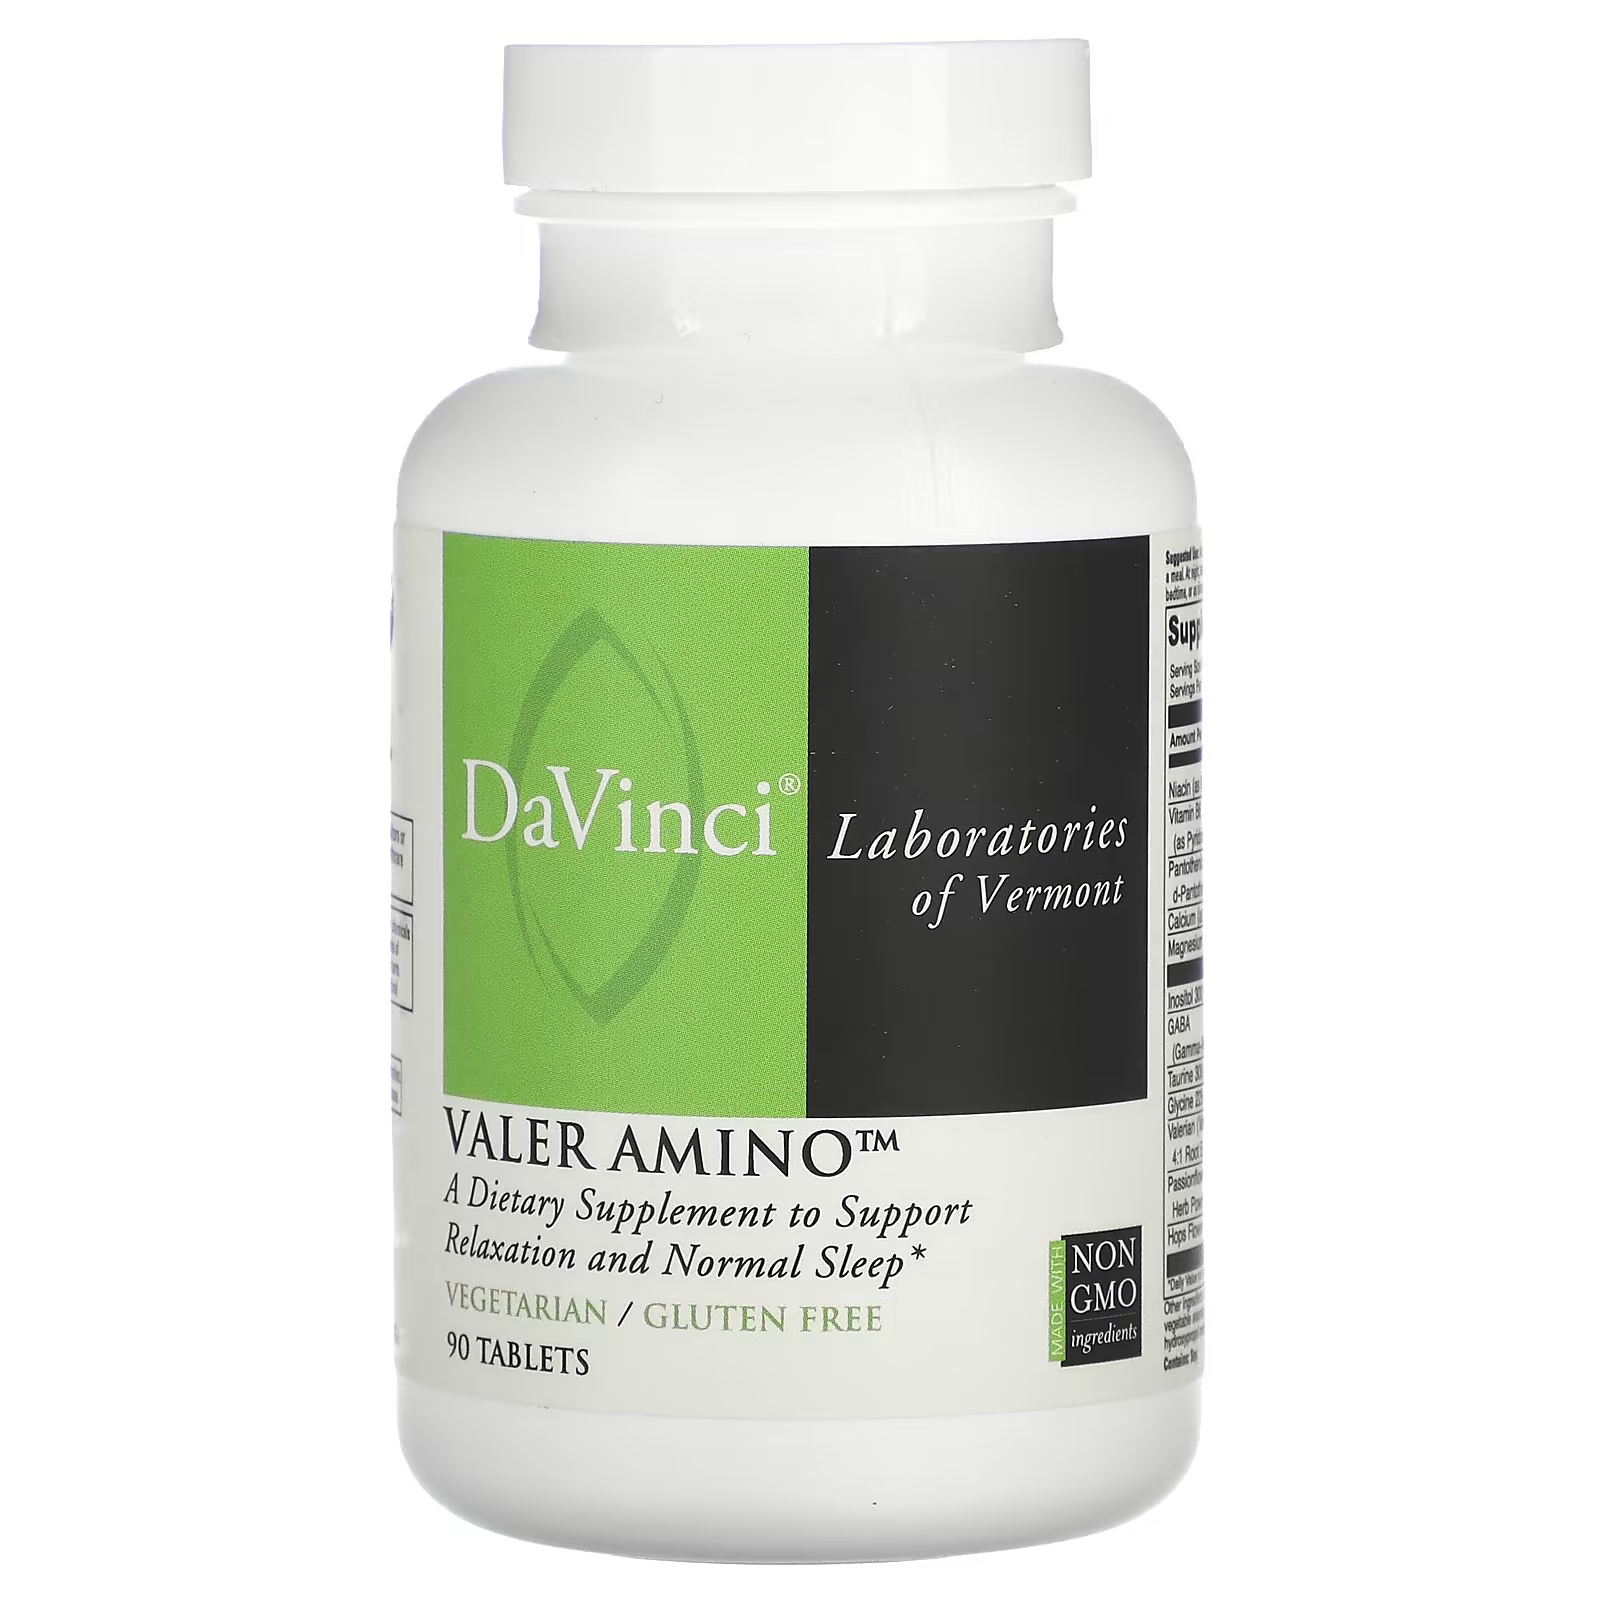 Пищевая добавка DaVinci Laboratories of Vermont Valer Amino, 90 таблеток